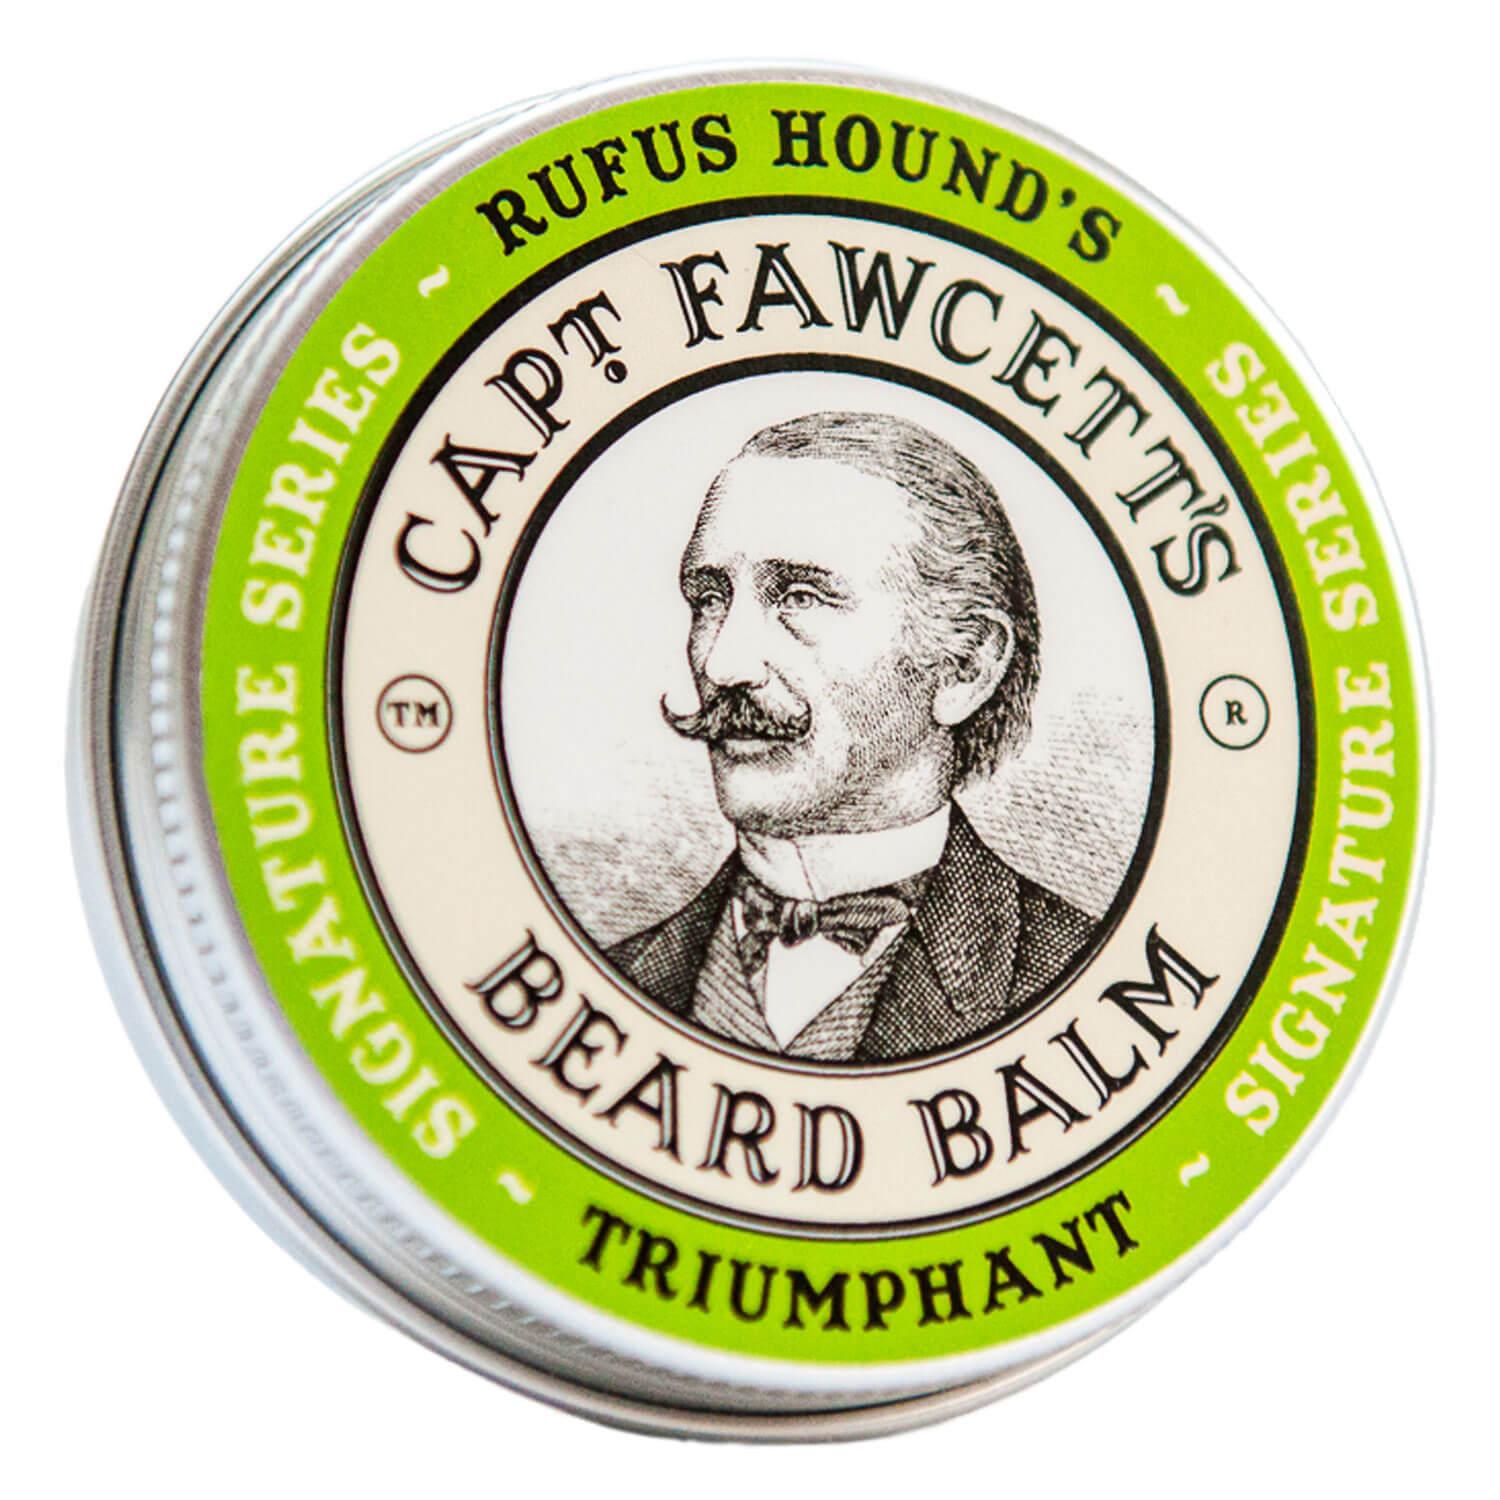 Capt. Fawcett Care - Triumphant Beard Balm